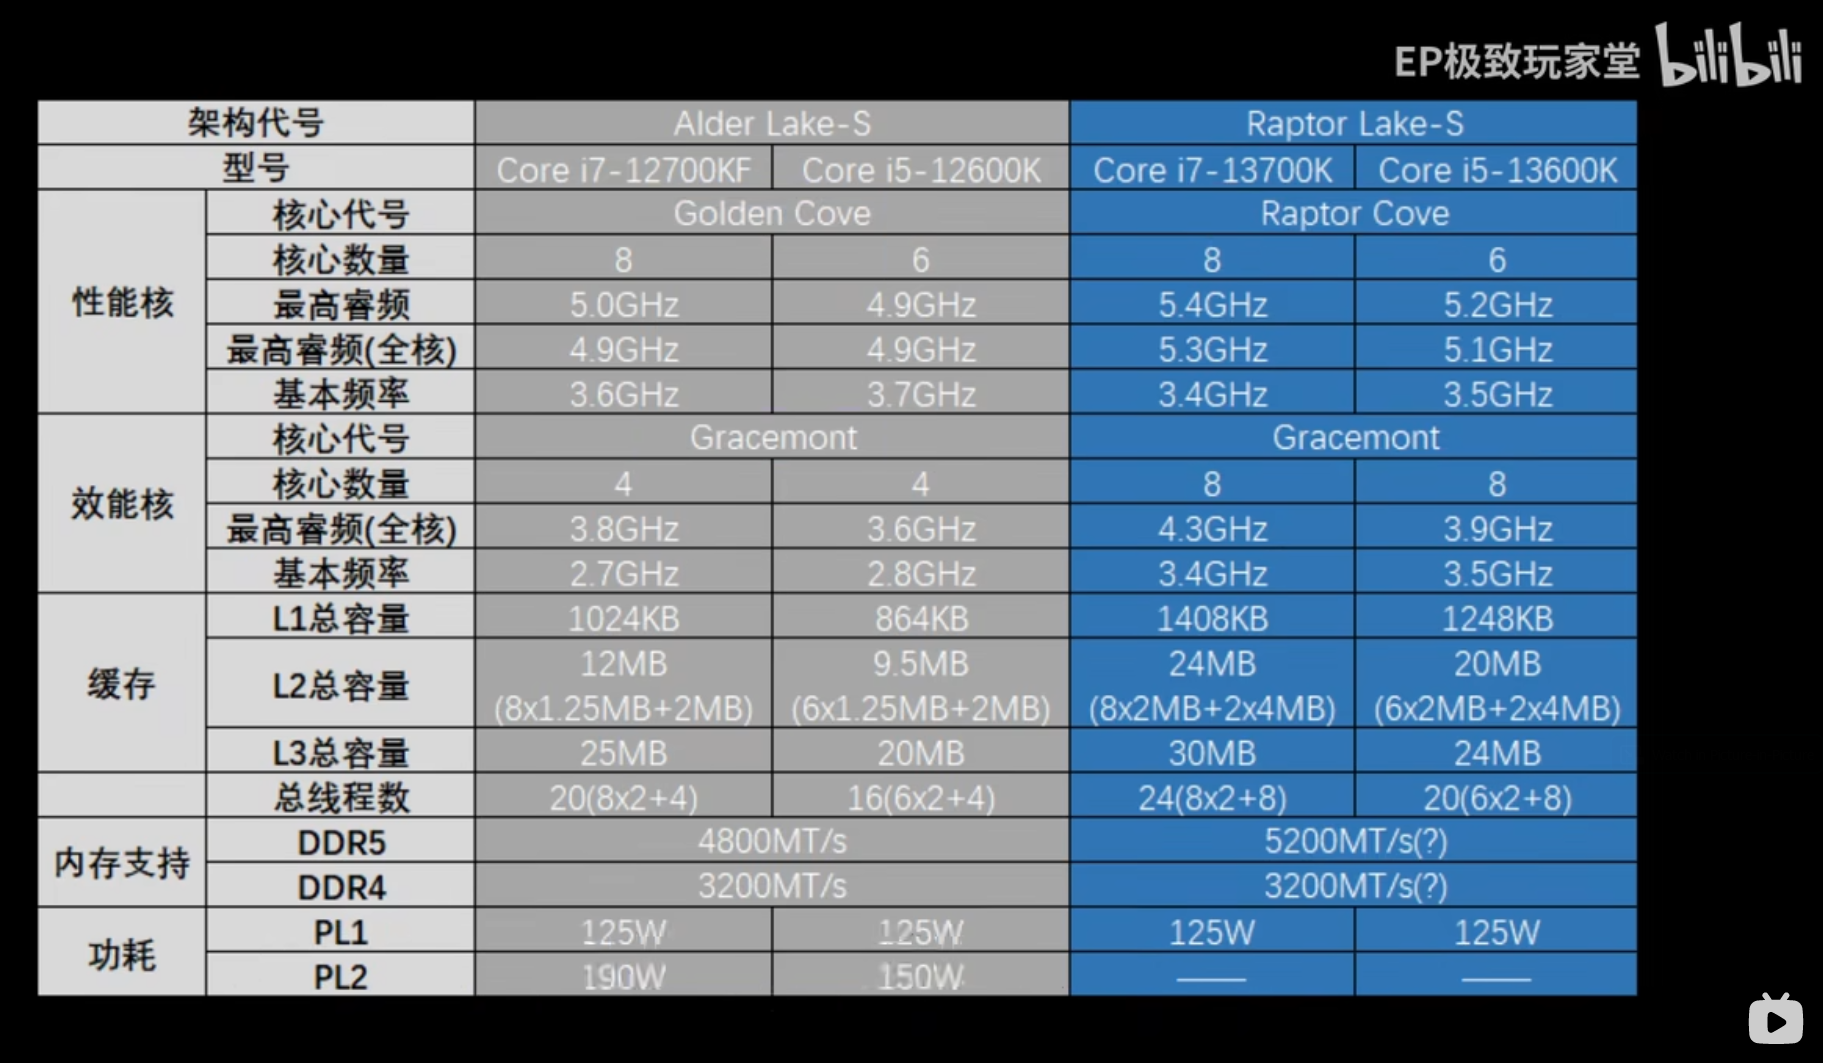 New Intel Core i5-13600K and Core i7-13700K benchmarks showcase